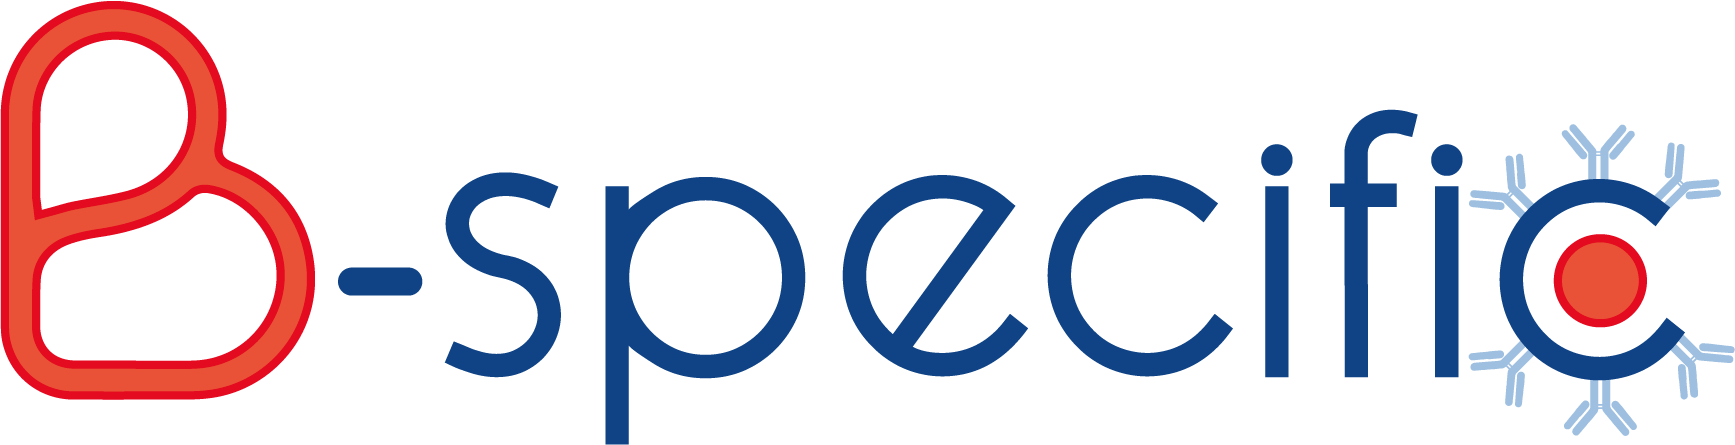 bspecific-logo